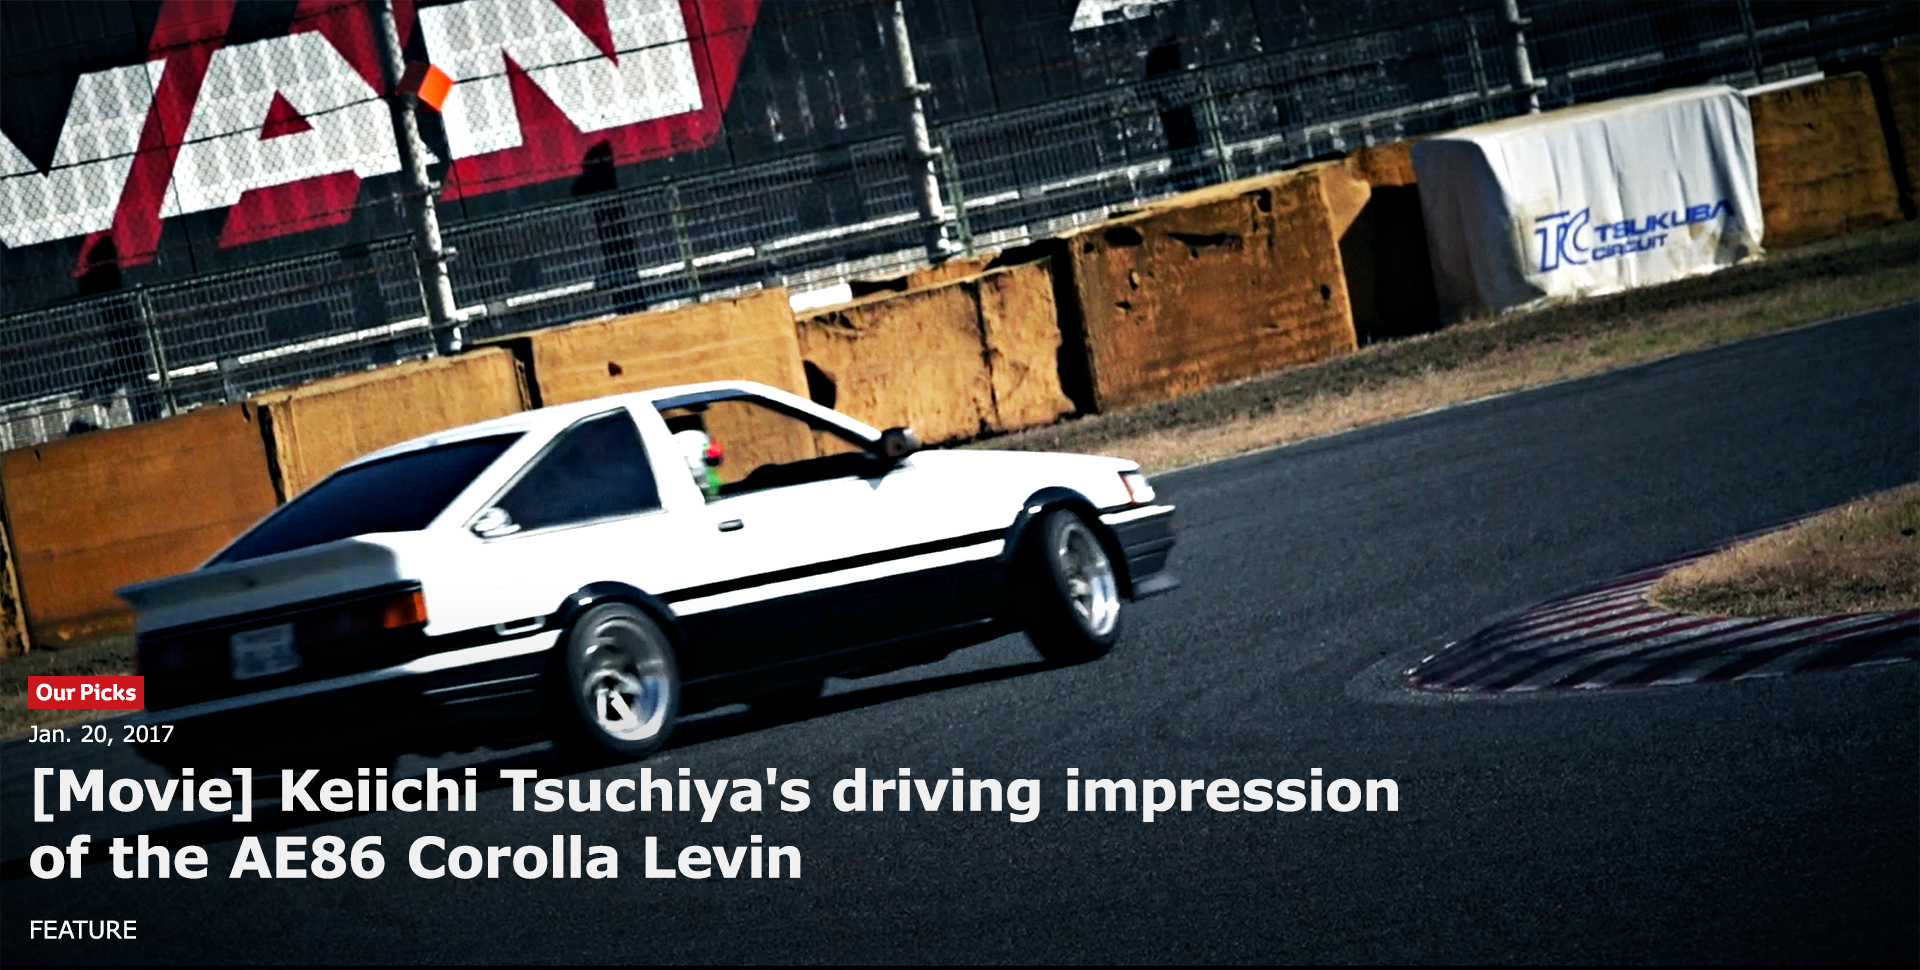 [Movie] Keiichi Tsuchiya's driving impression of the AE86 Corolla Levin